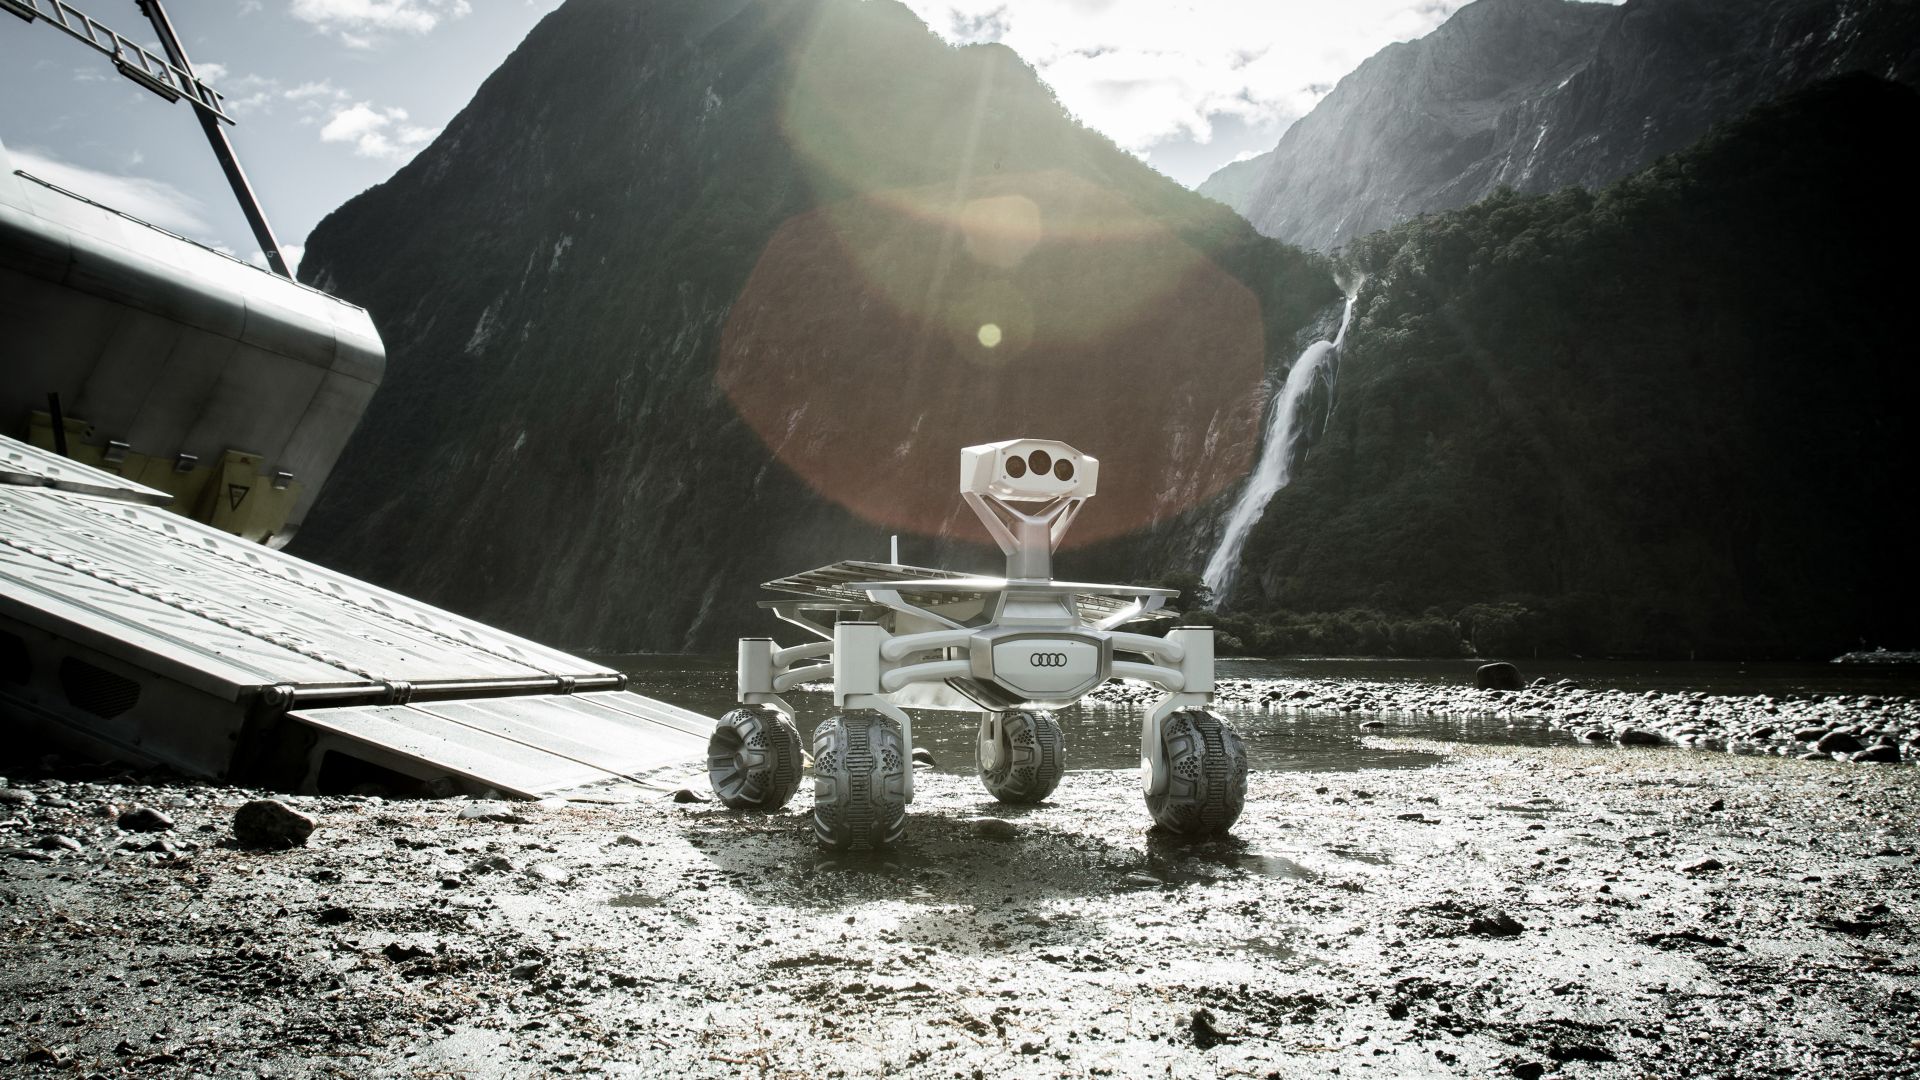 Wallpaper Audi, moon rover, Alien: Covenant, movie, 4k